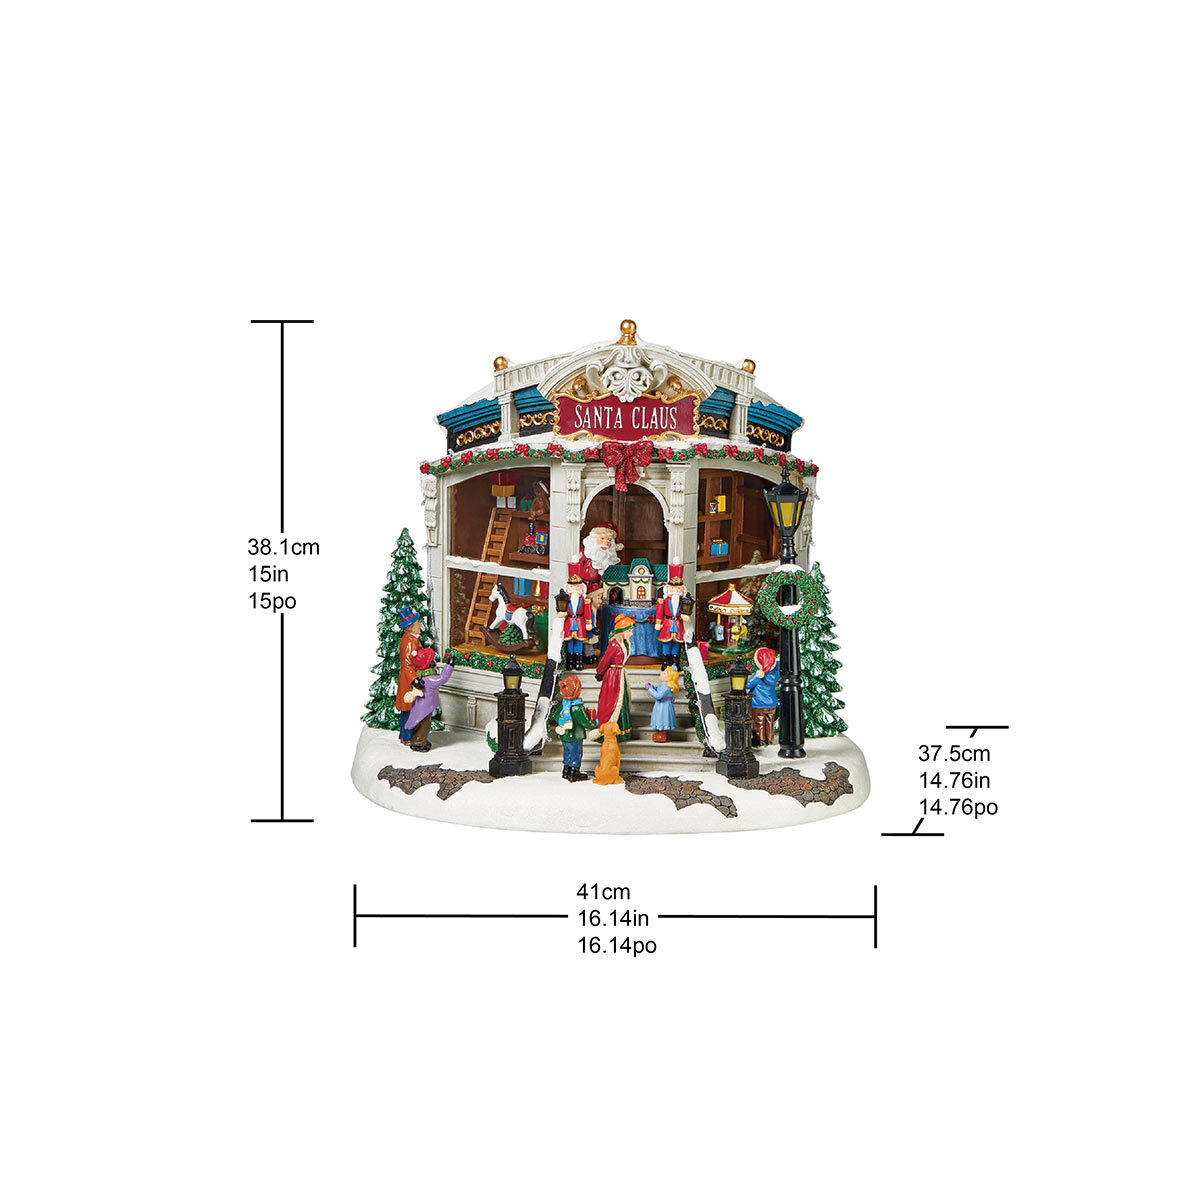 Toy Shop Dimensions Image